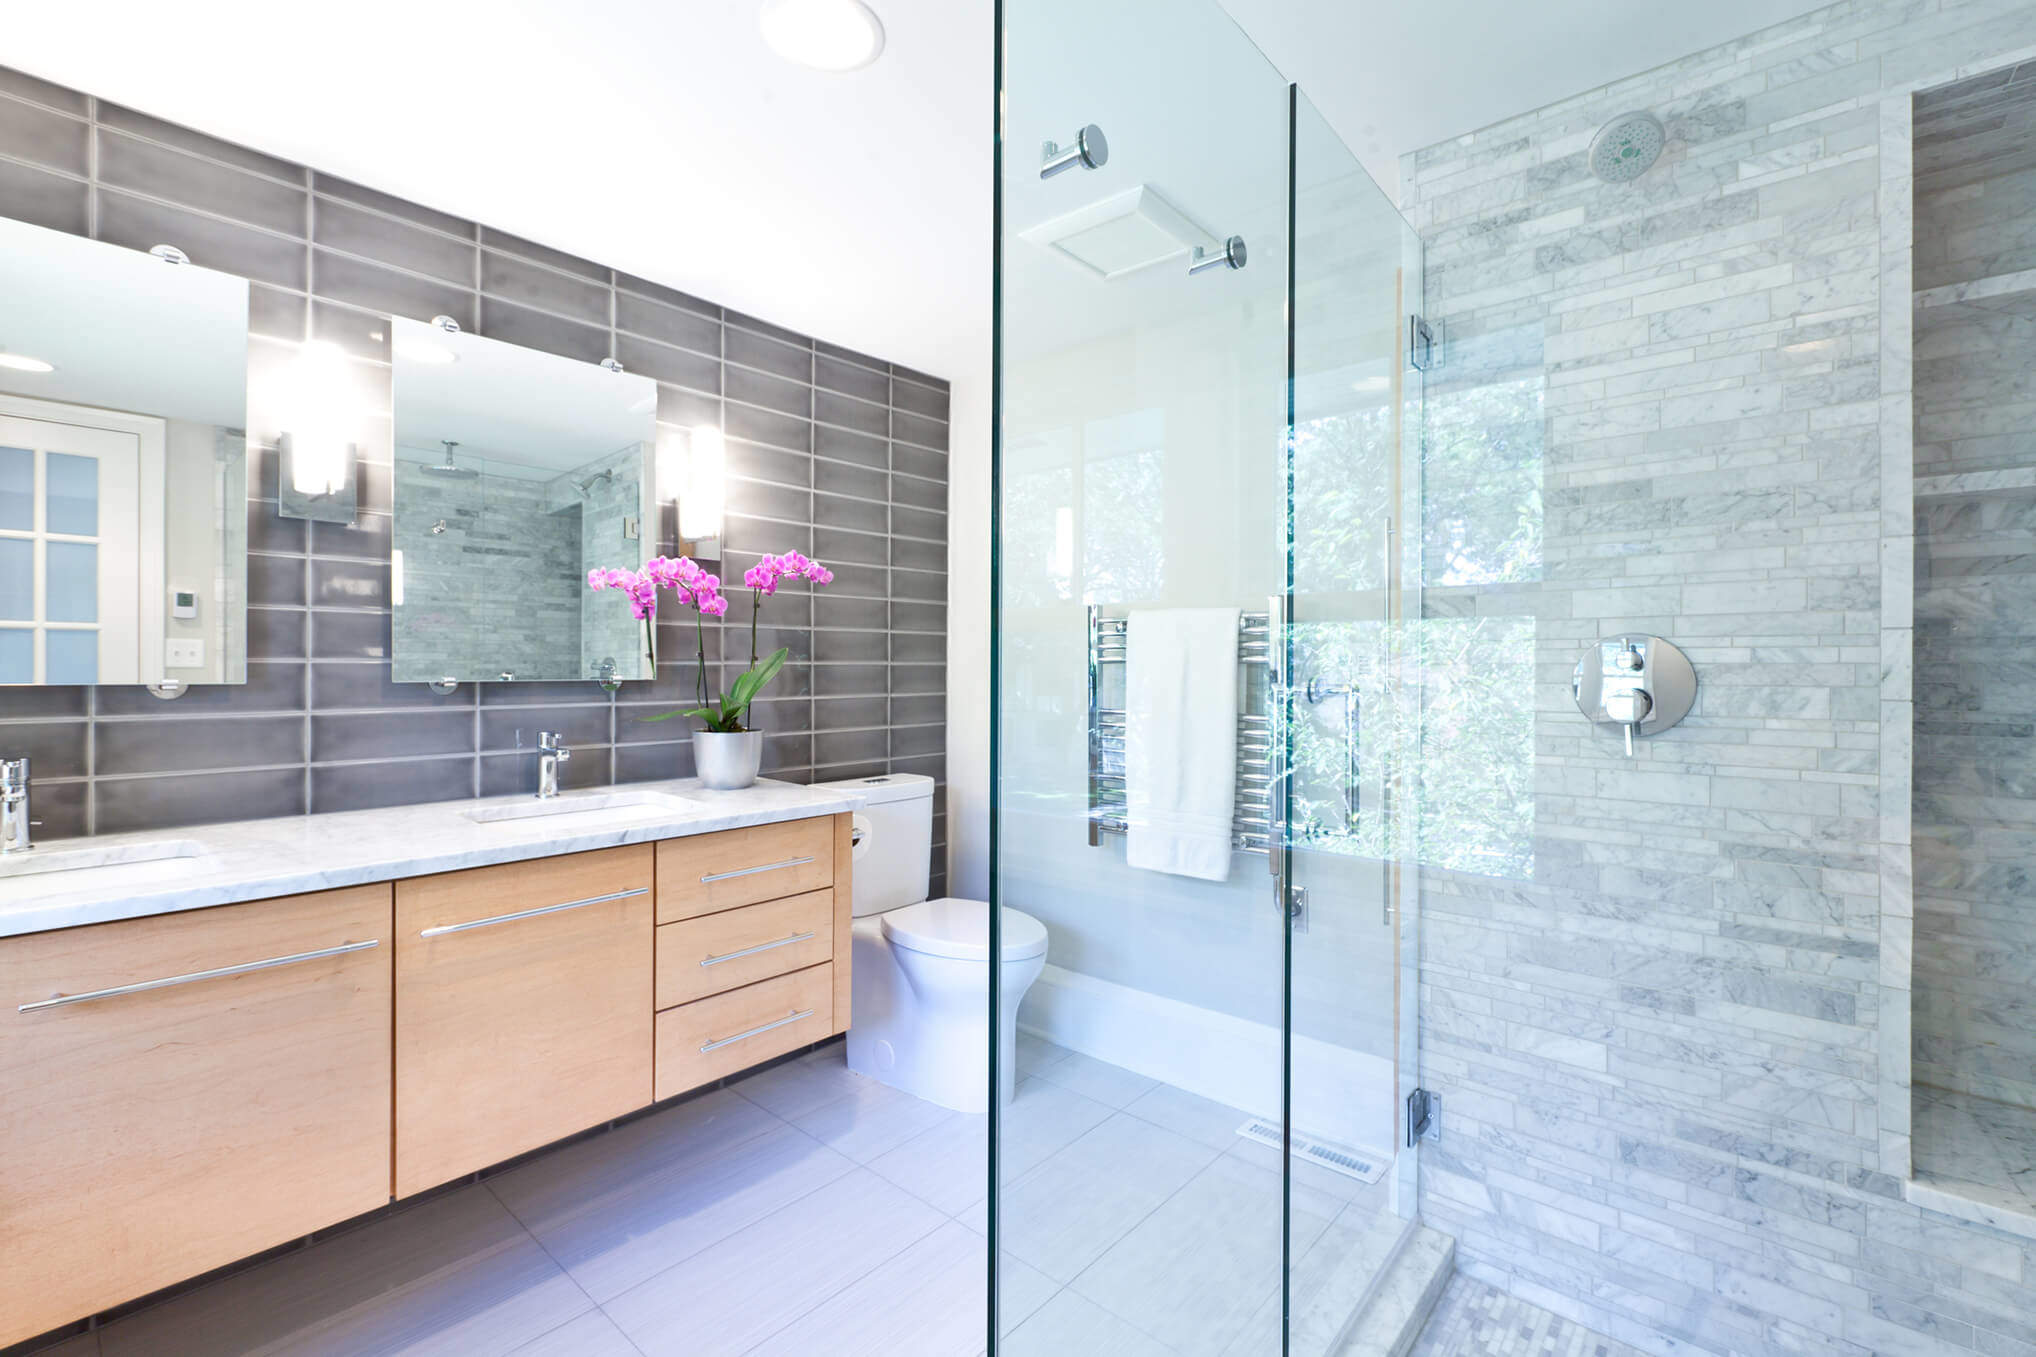  |  Contemporary Bathroom Design with Glass Shower Stall